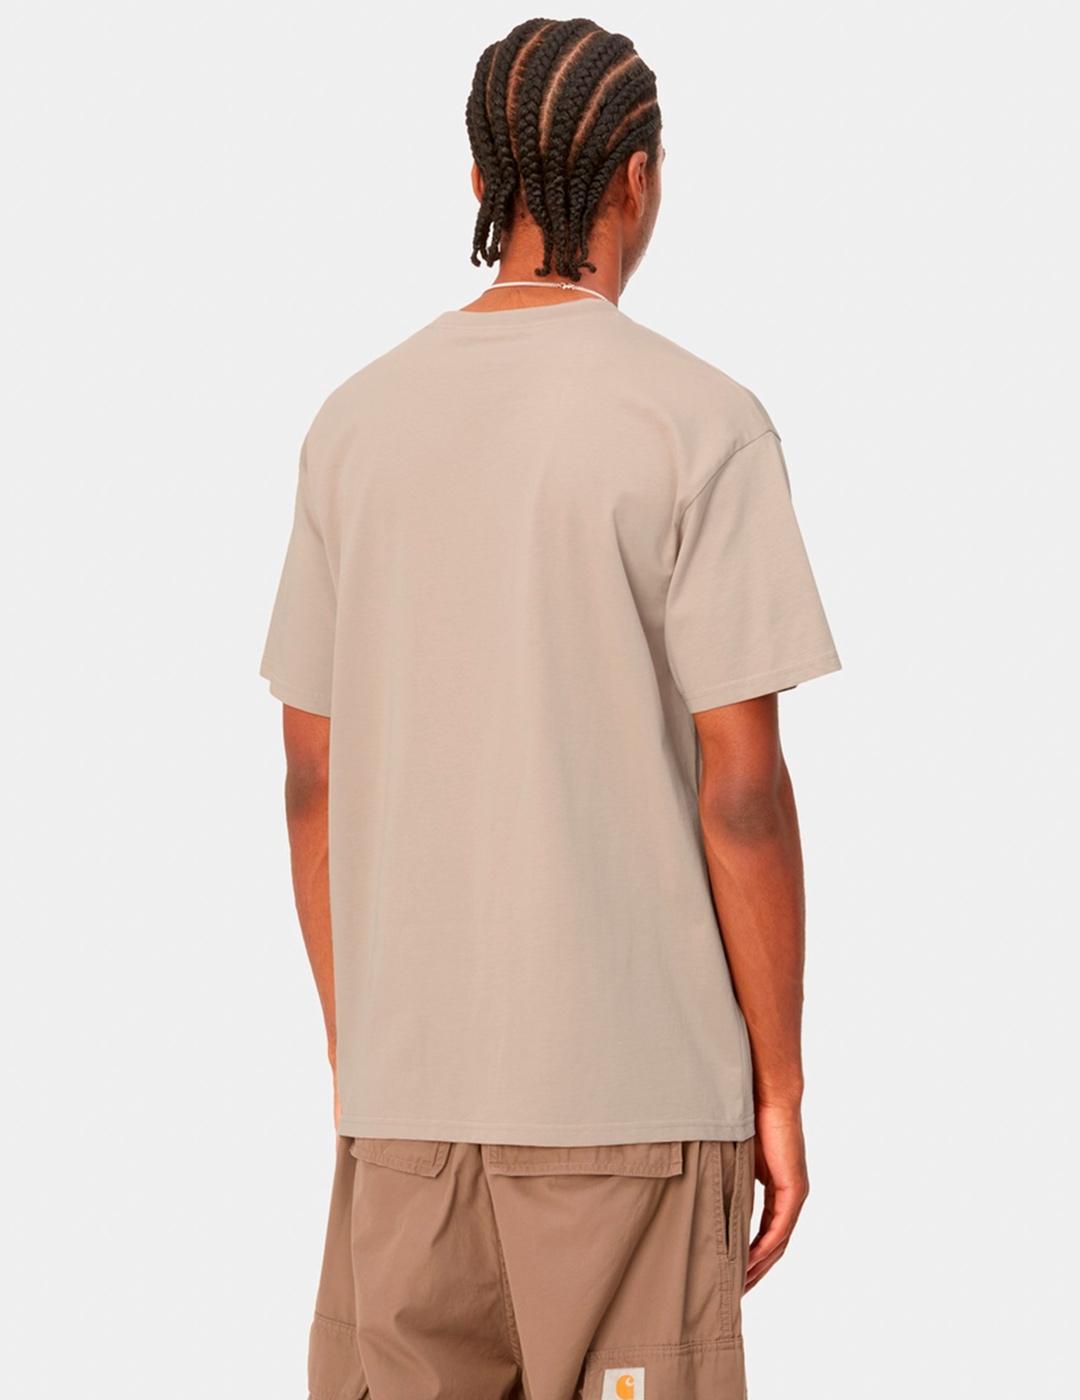 Camiseta CARHARTT SCRIPT EMBROIDERY - Wall/White